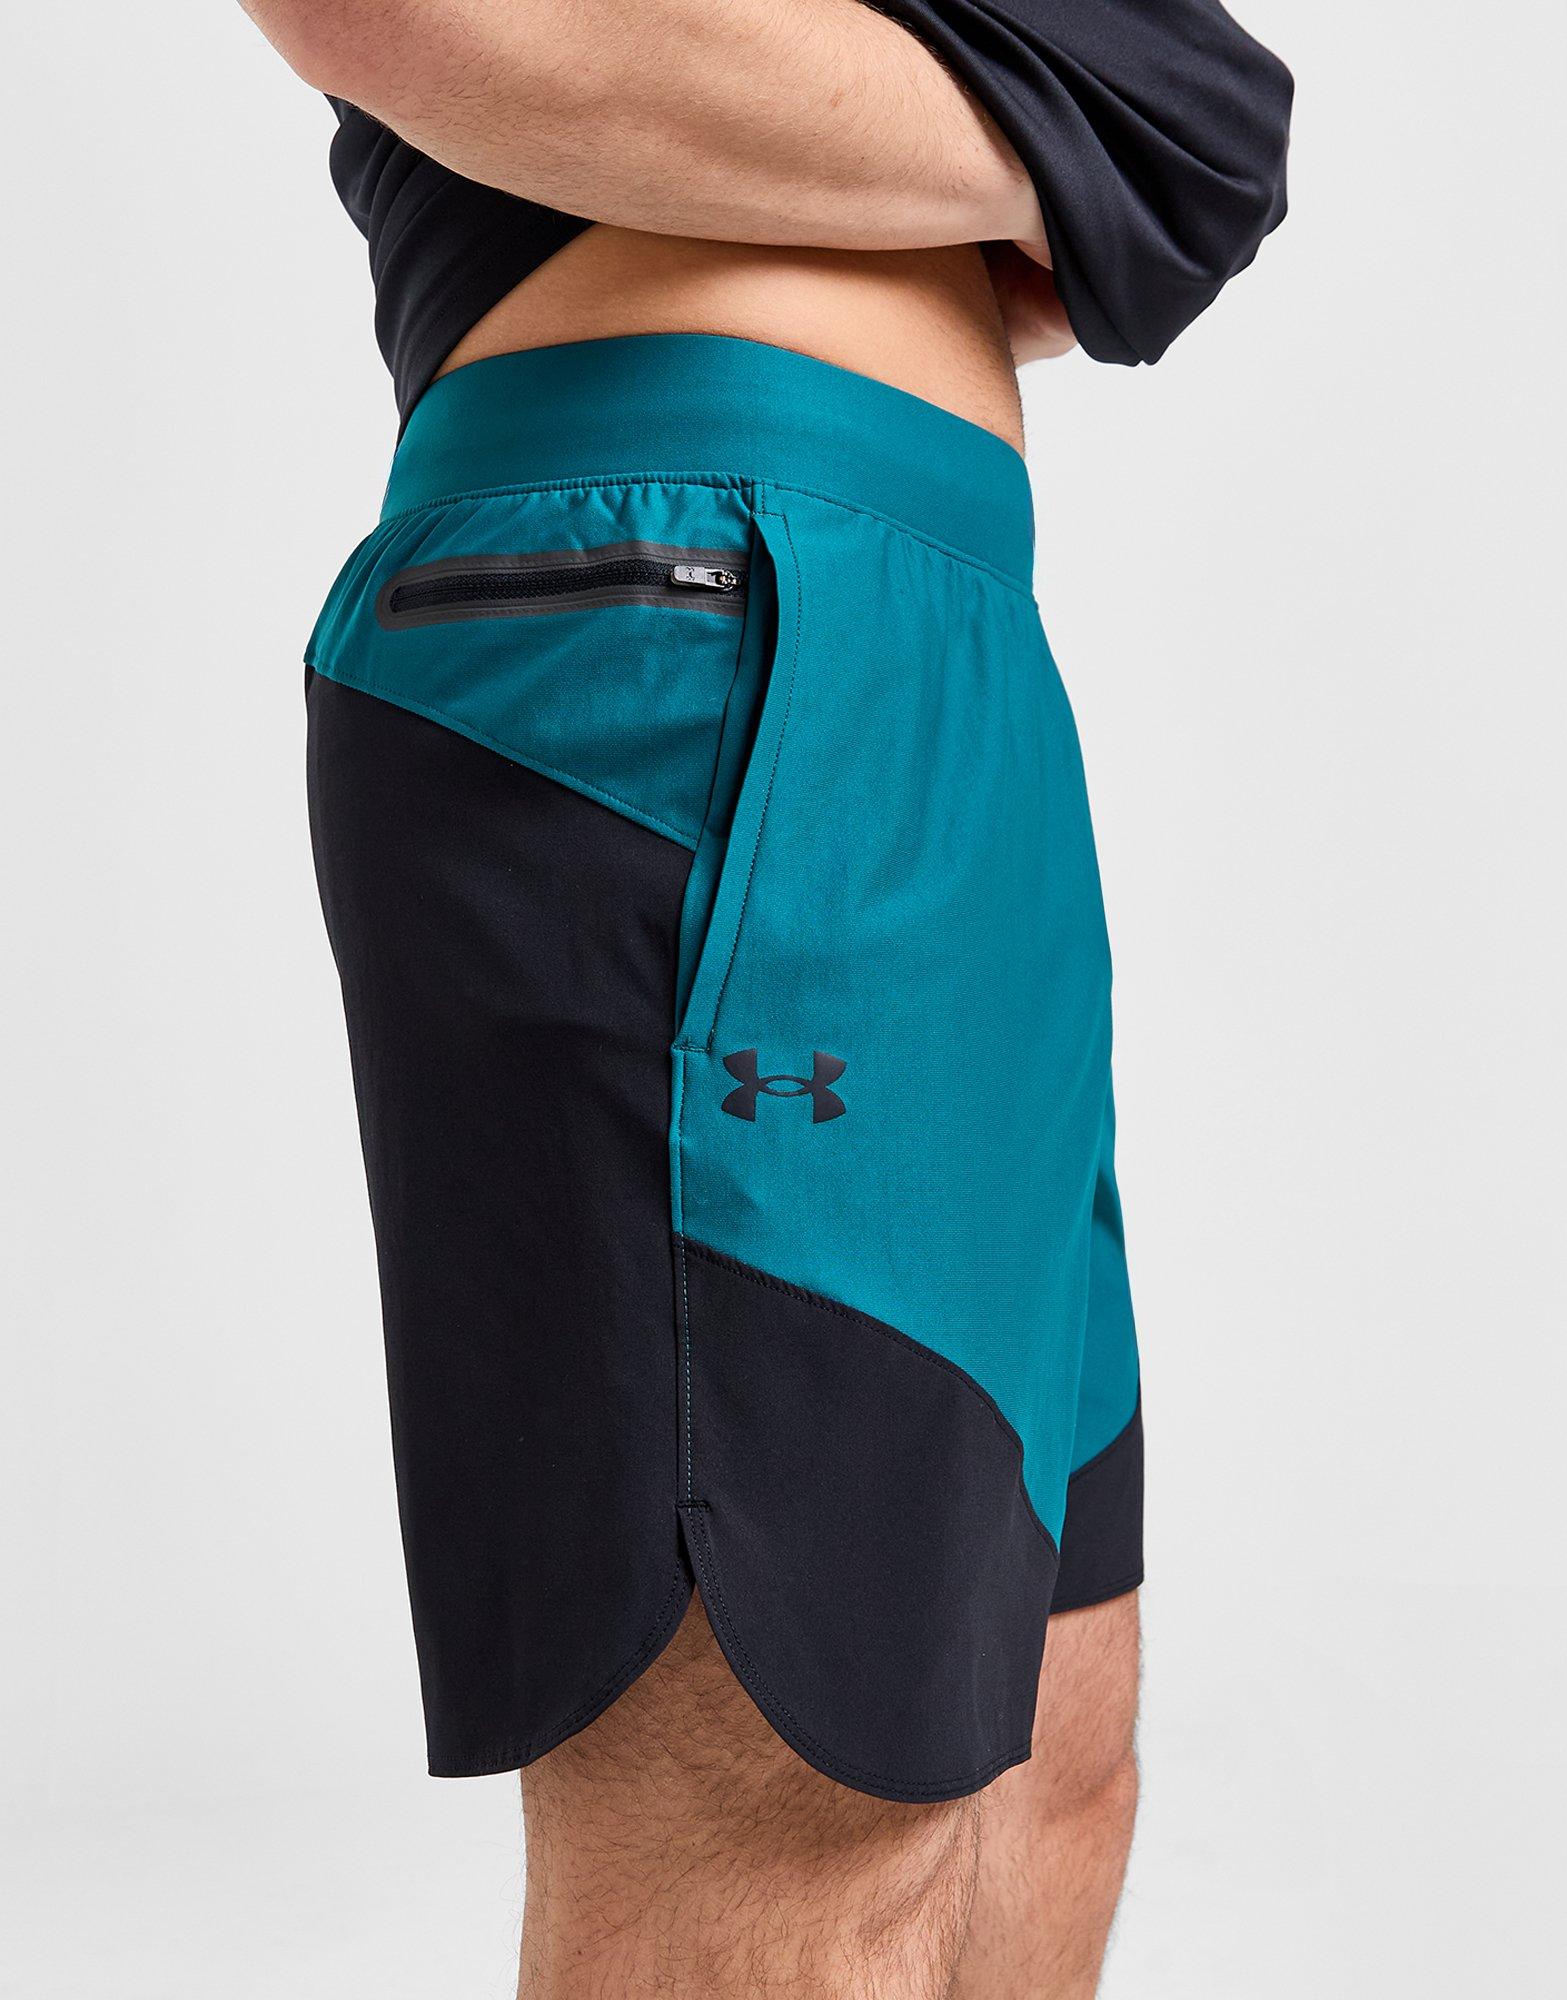 Under Armour Women's Flex Woven 5 Inch Shorts